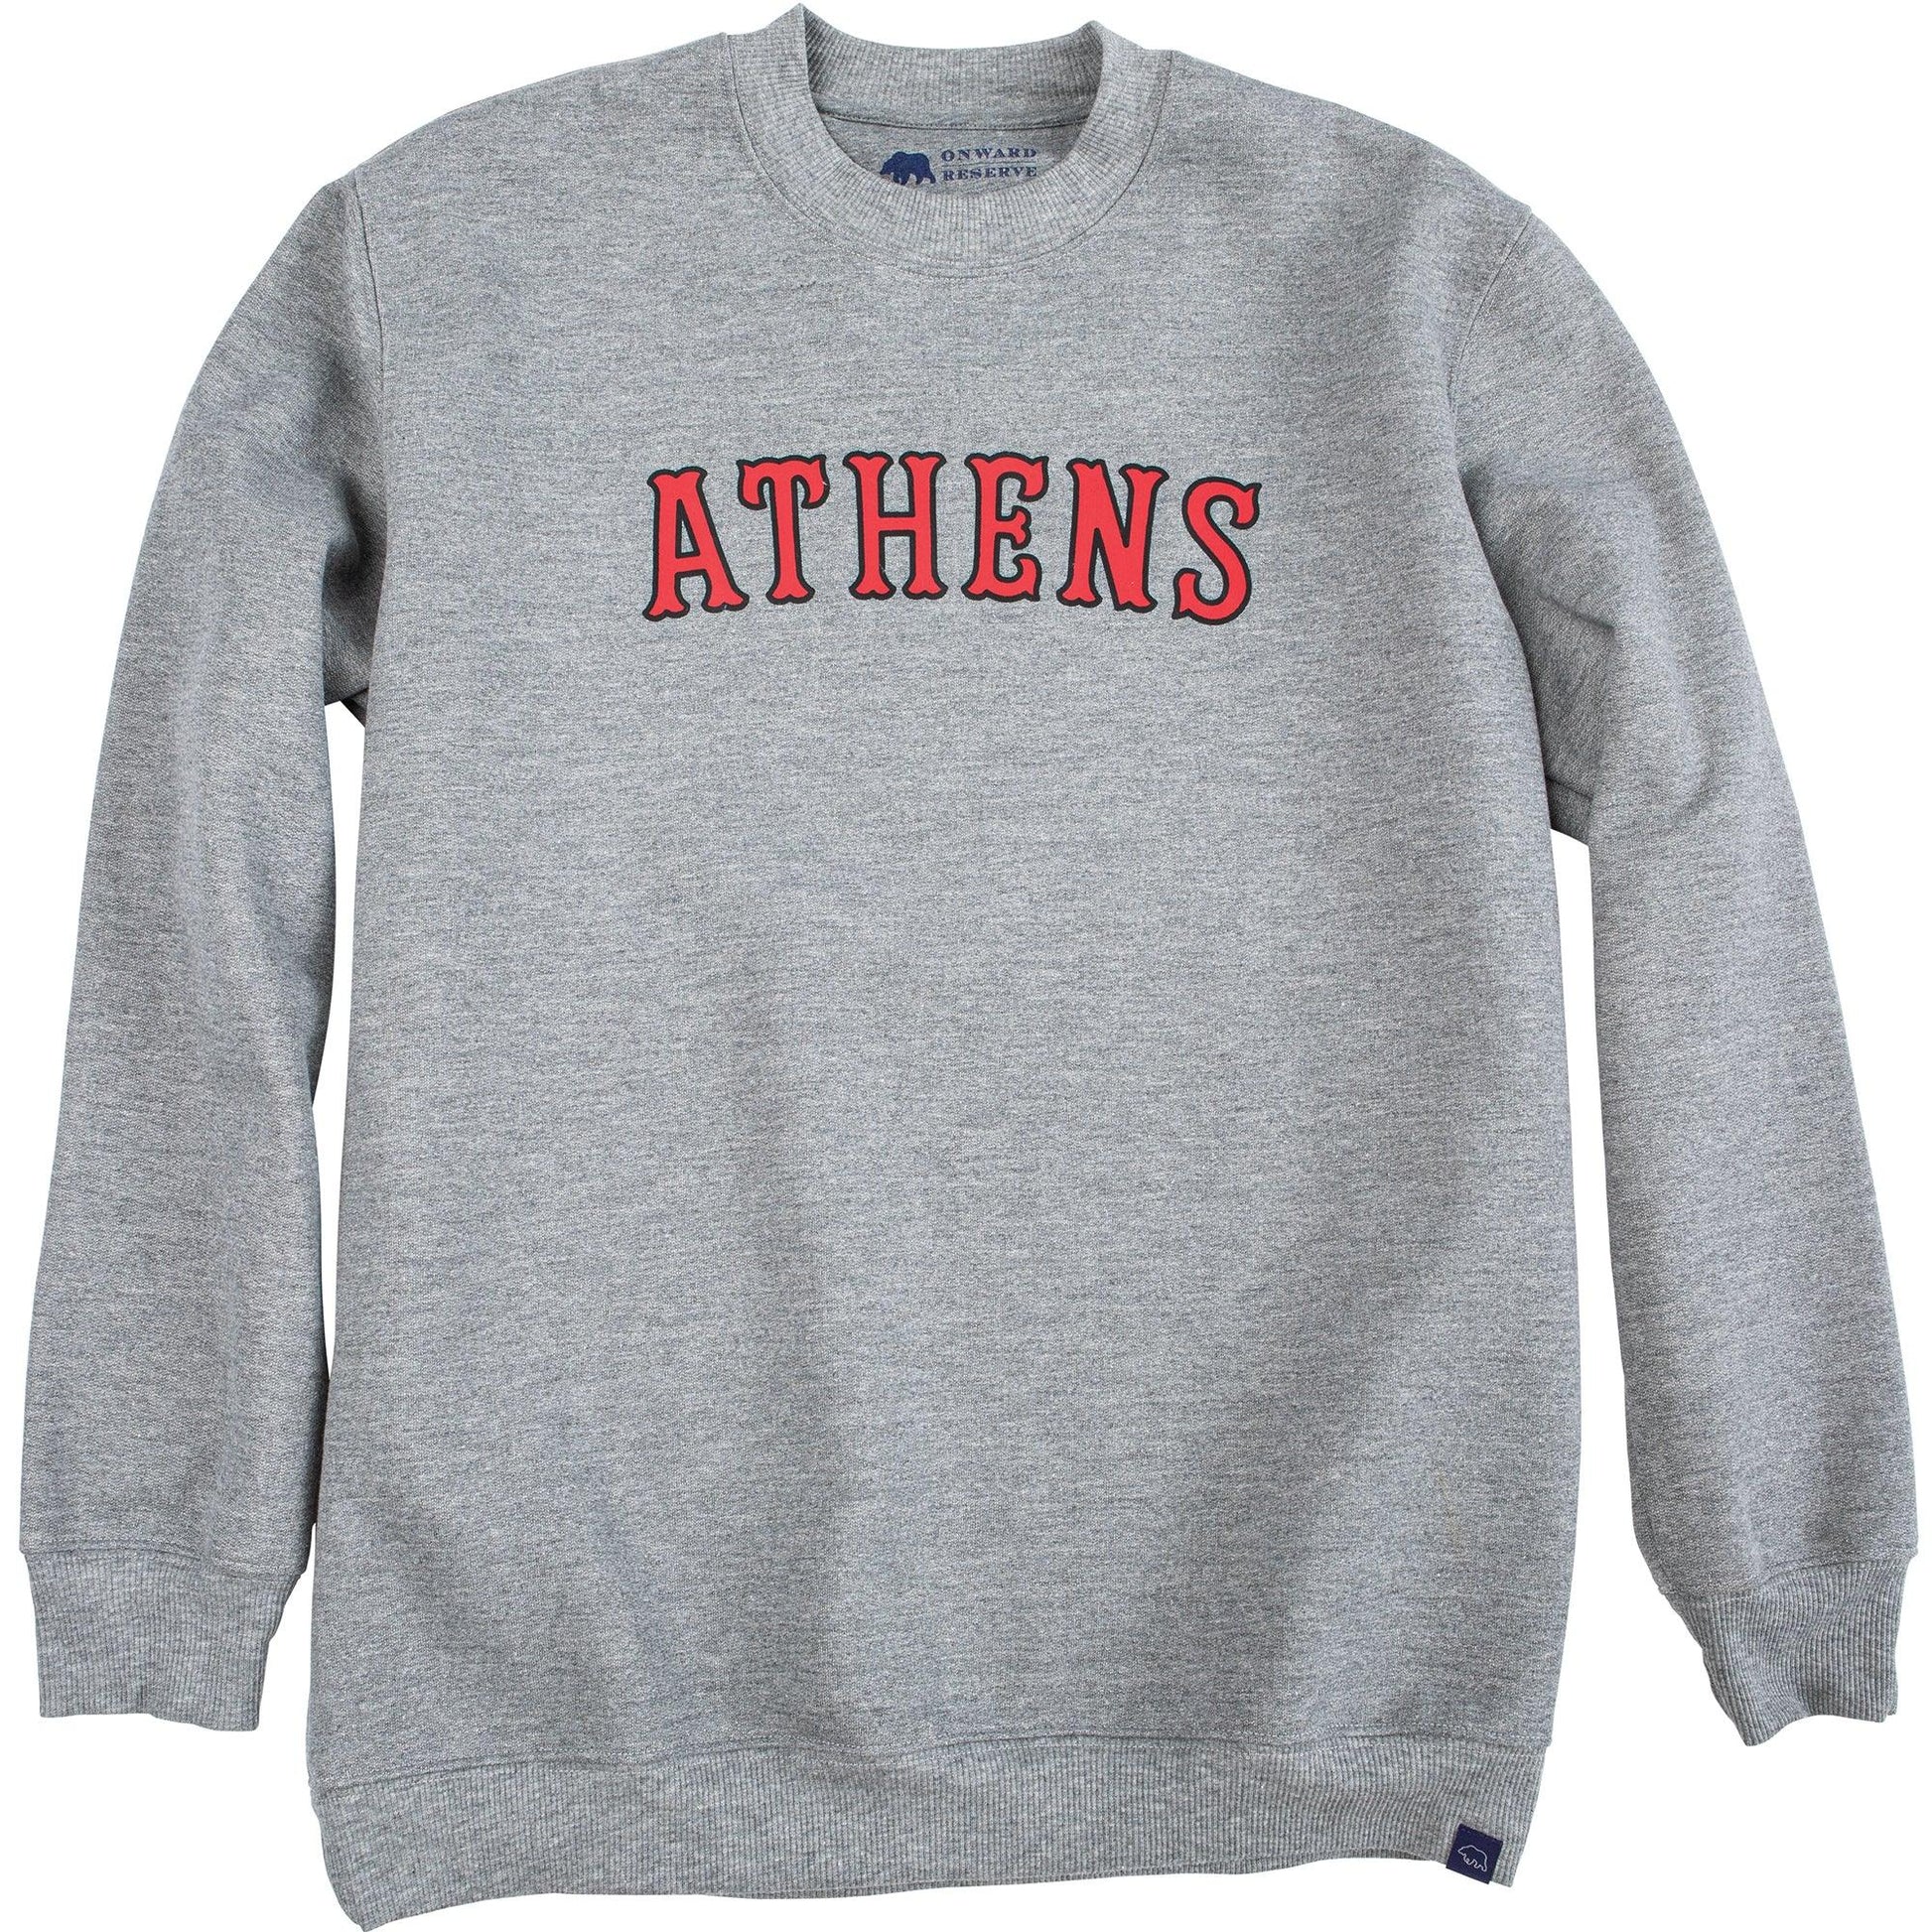 Athens Vintage Crewneck Sweatshirt M